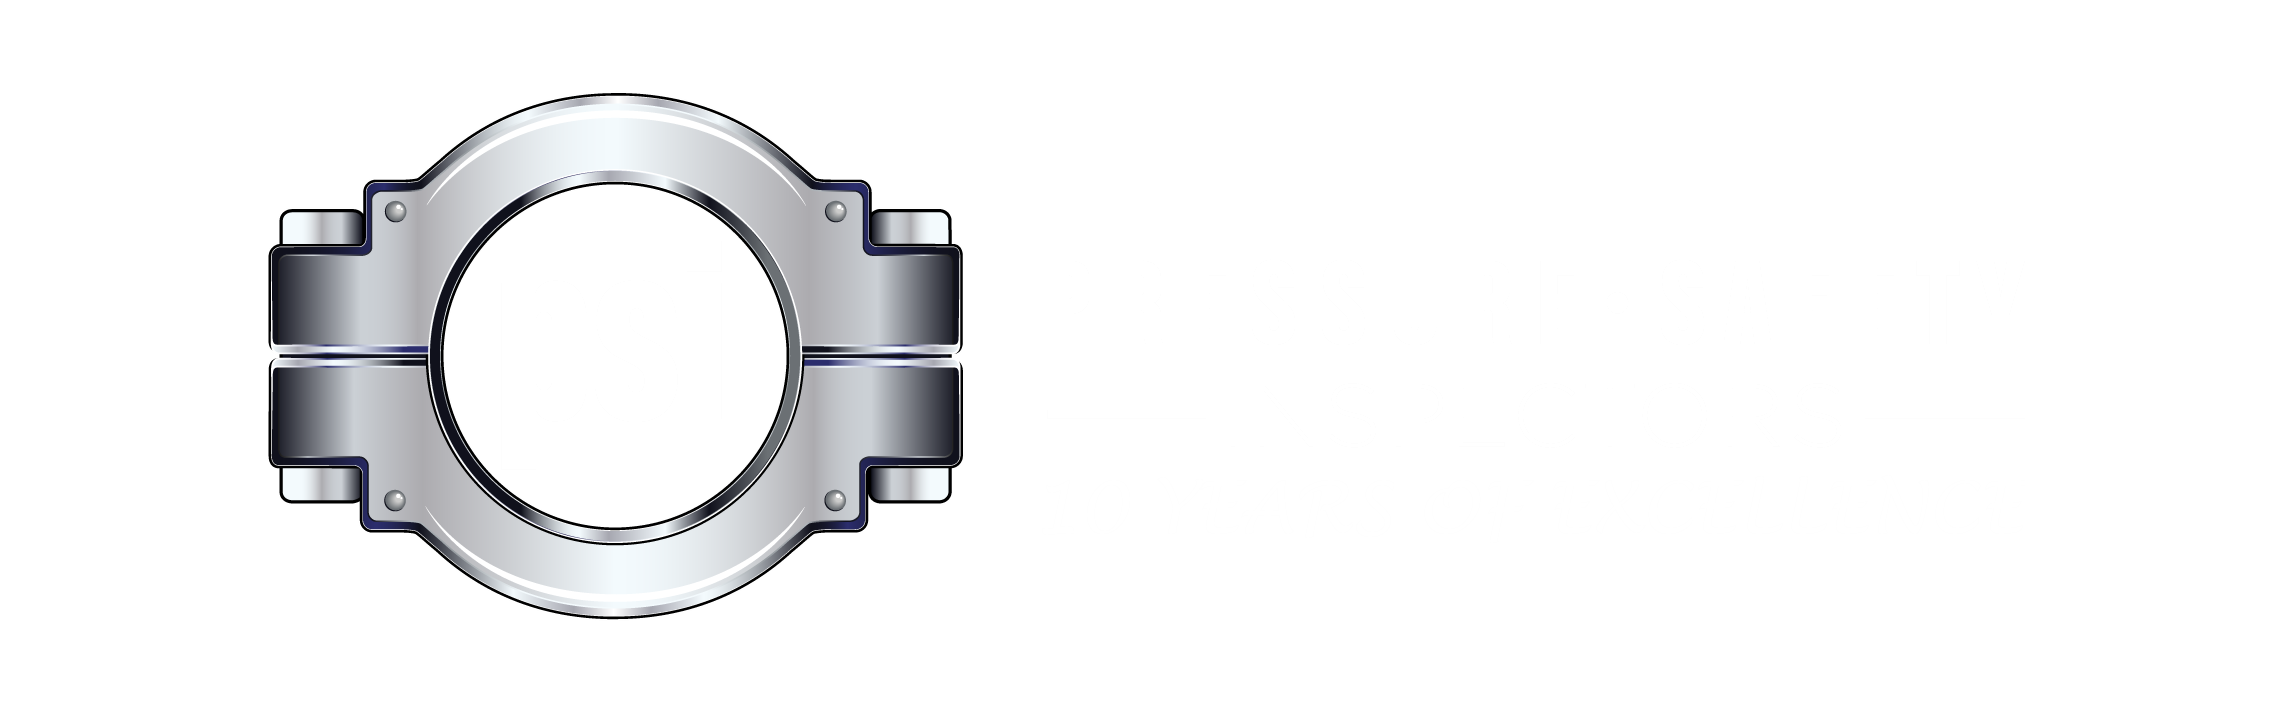 Pressure Safety Inspectors